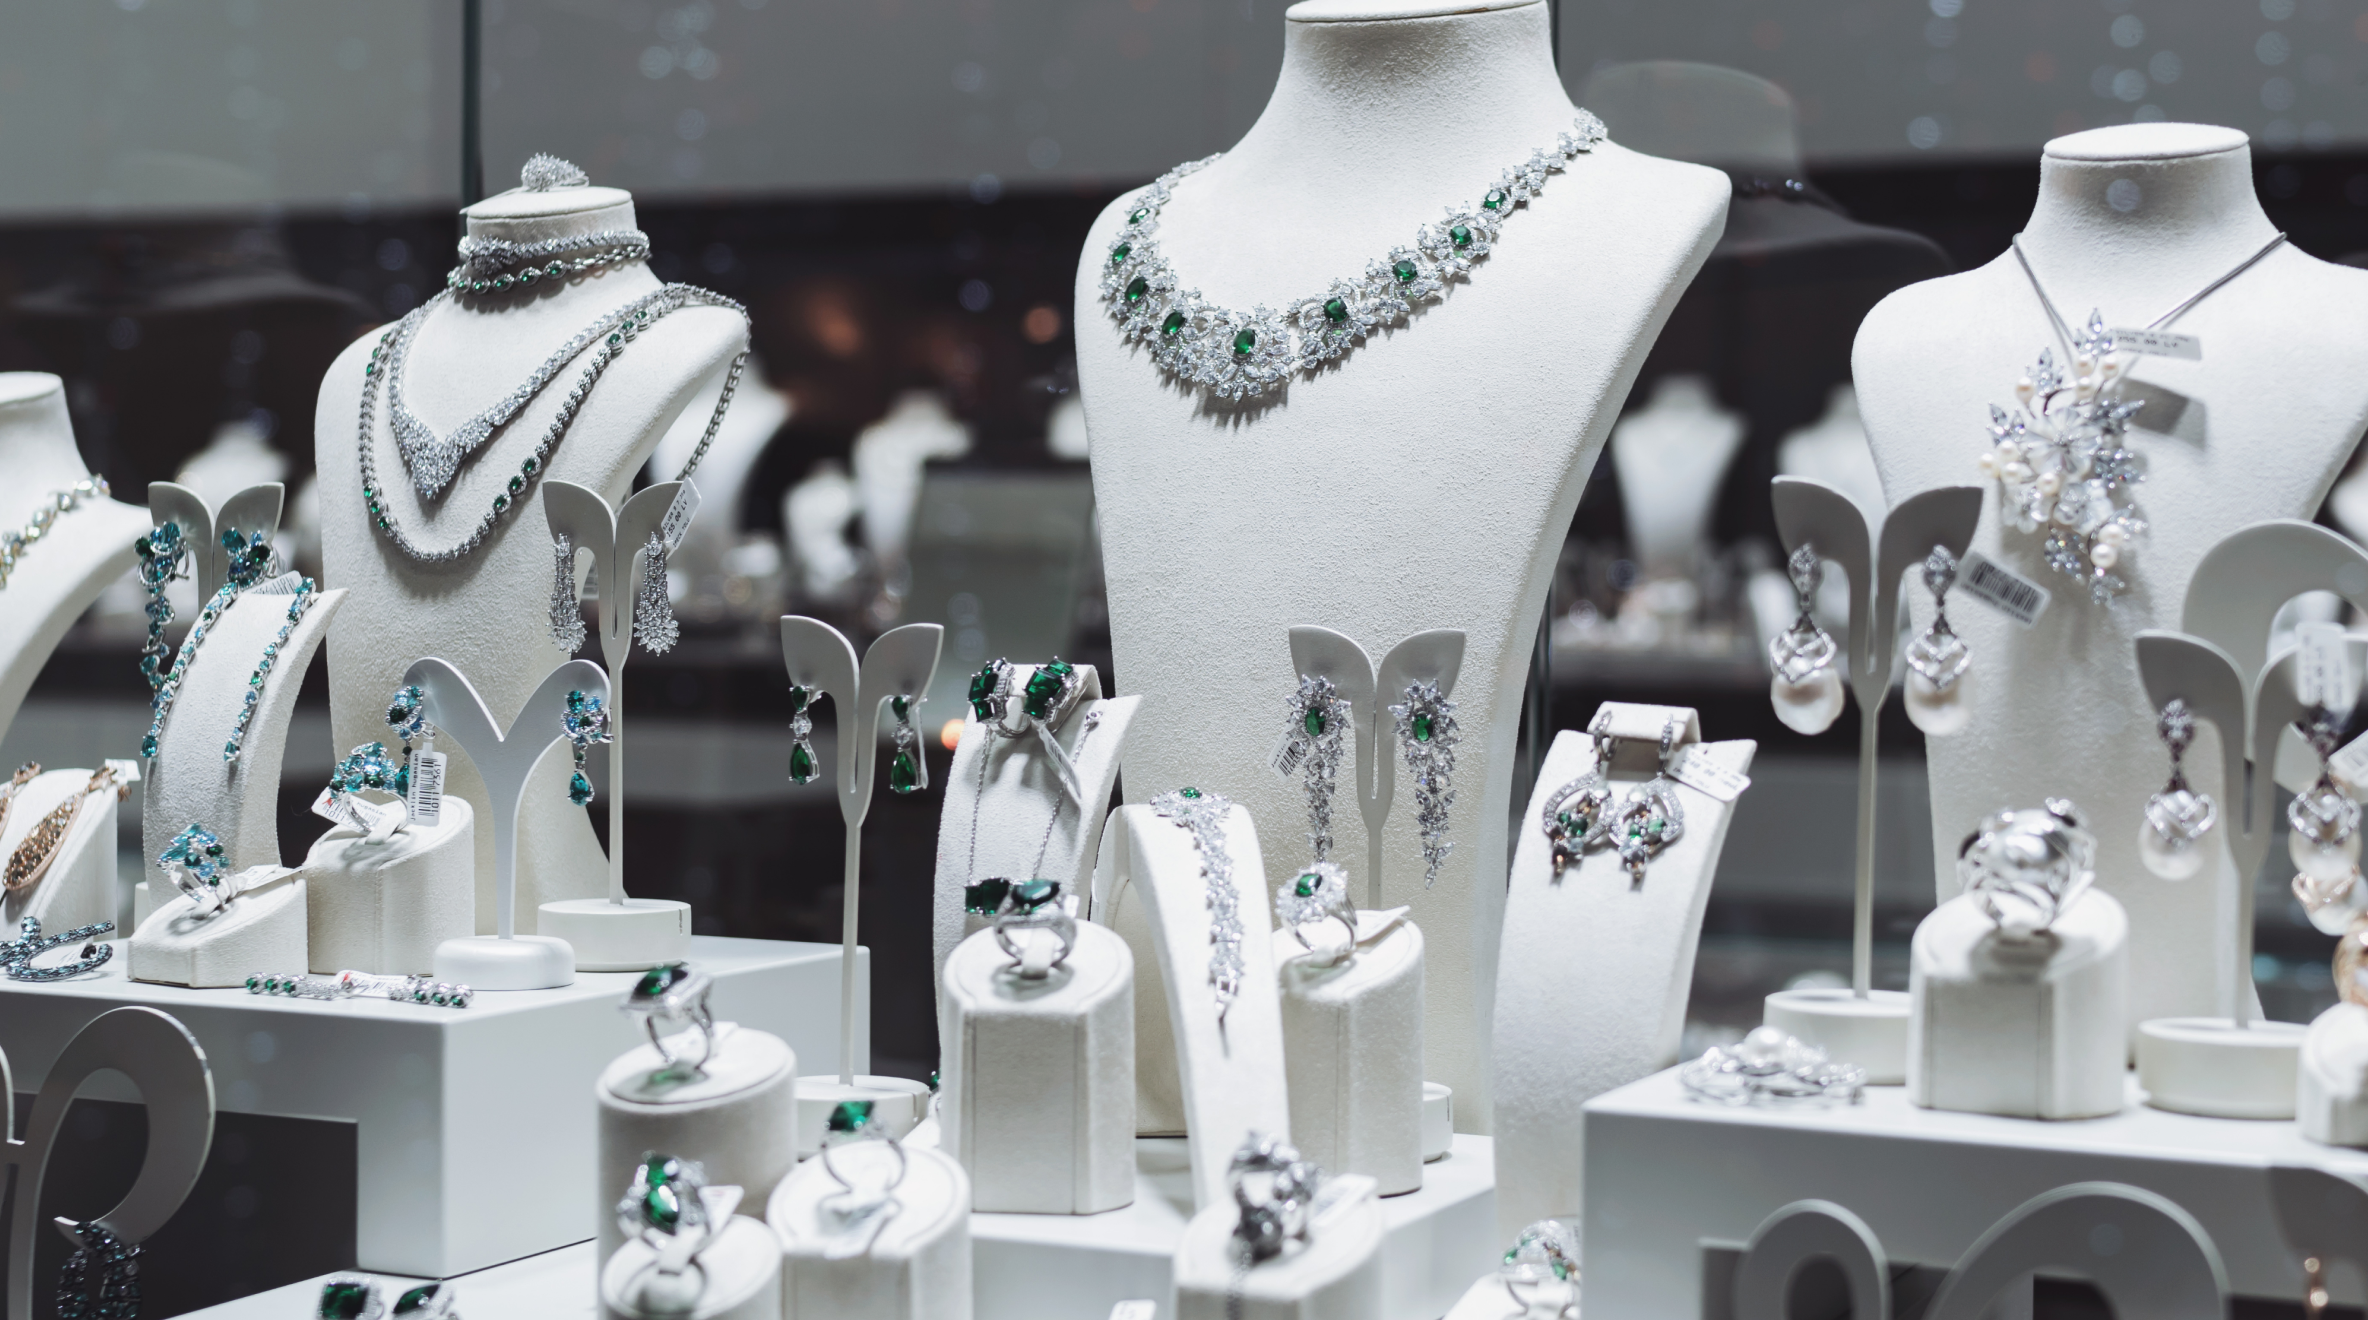  Window display of silver, diamond, and green gemstone jewelry